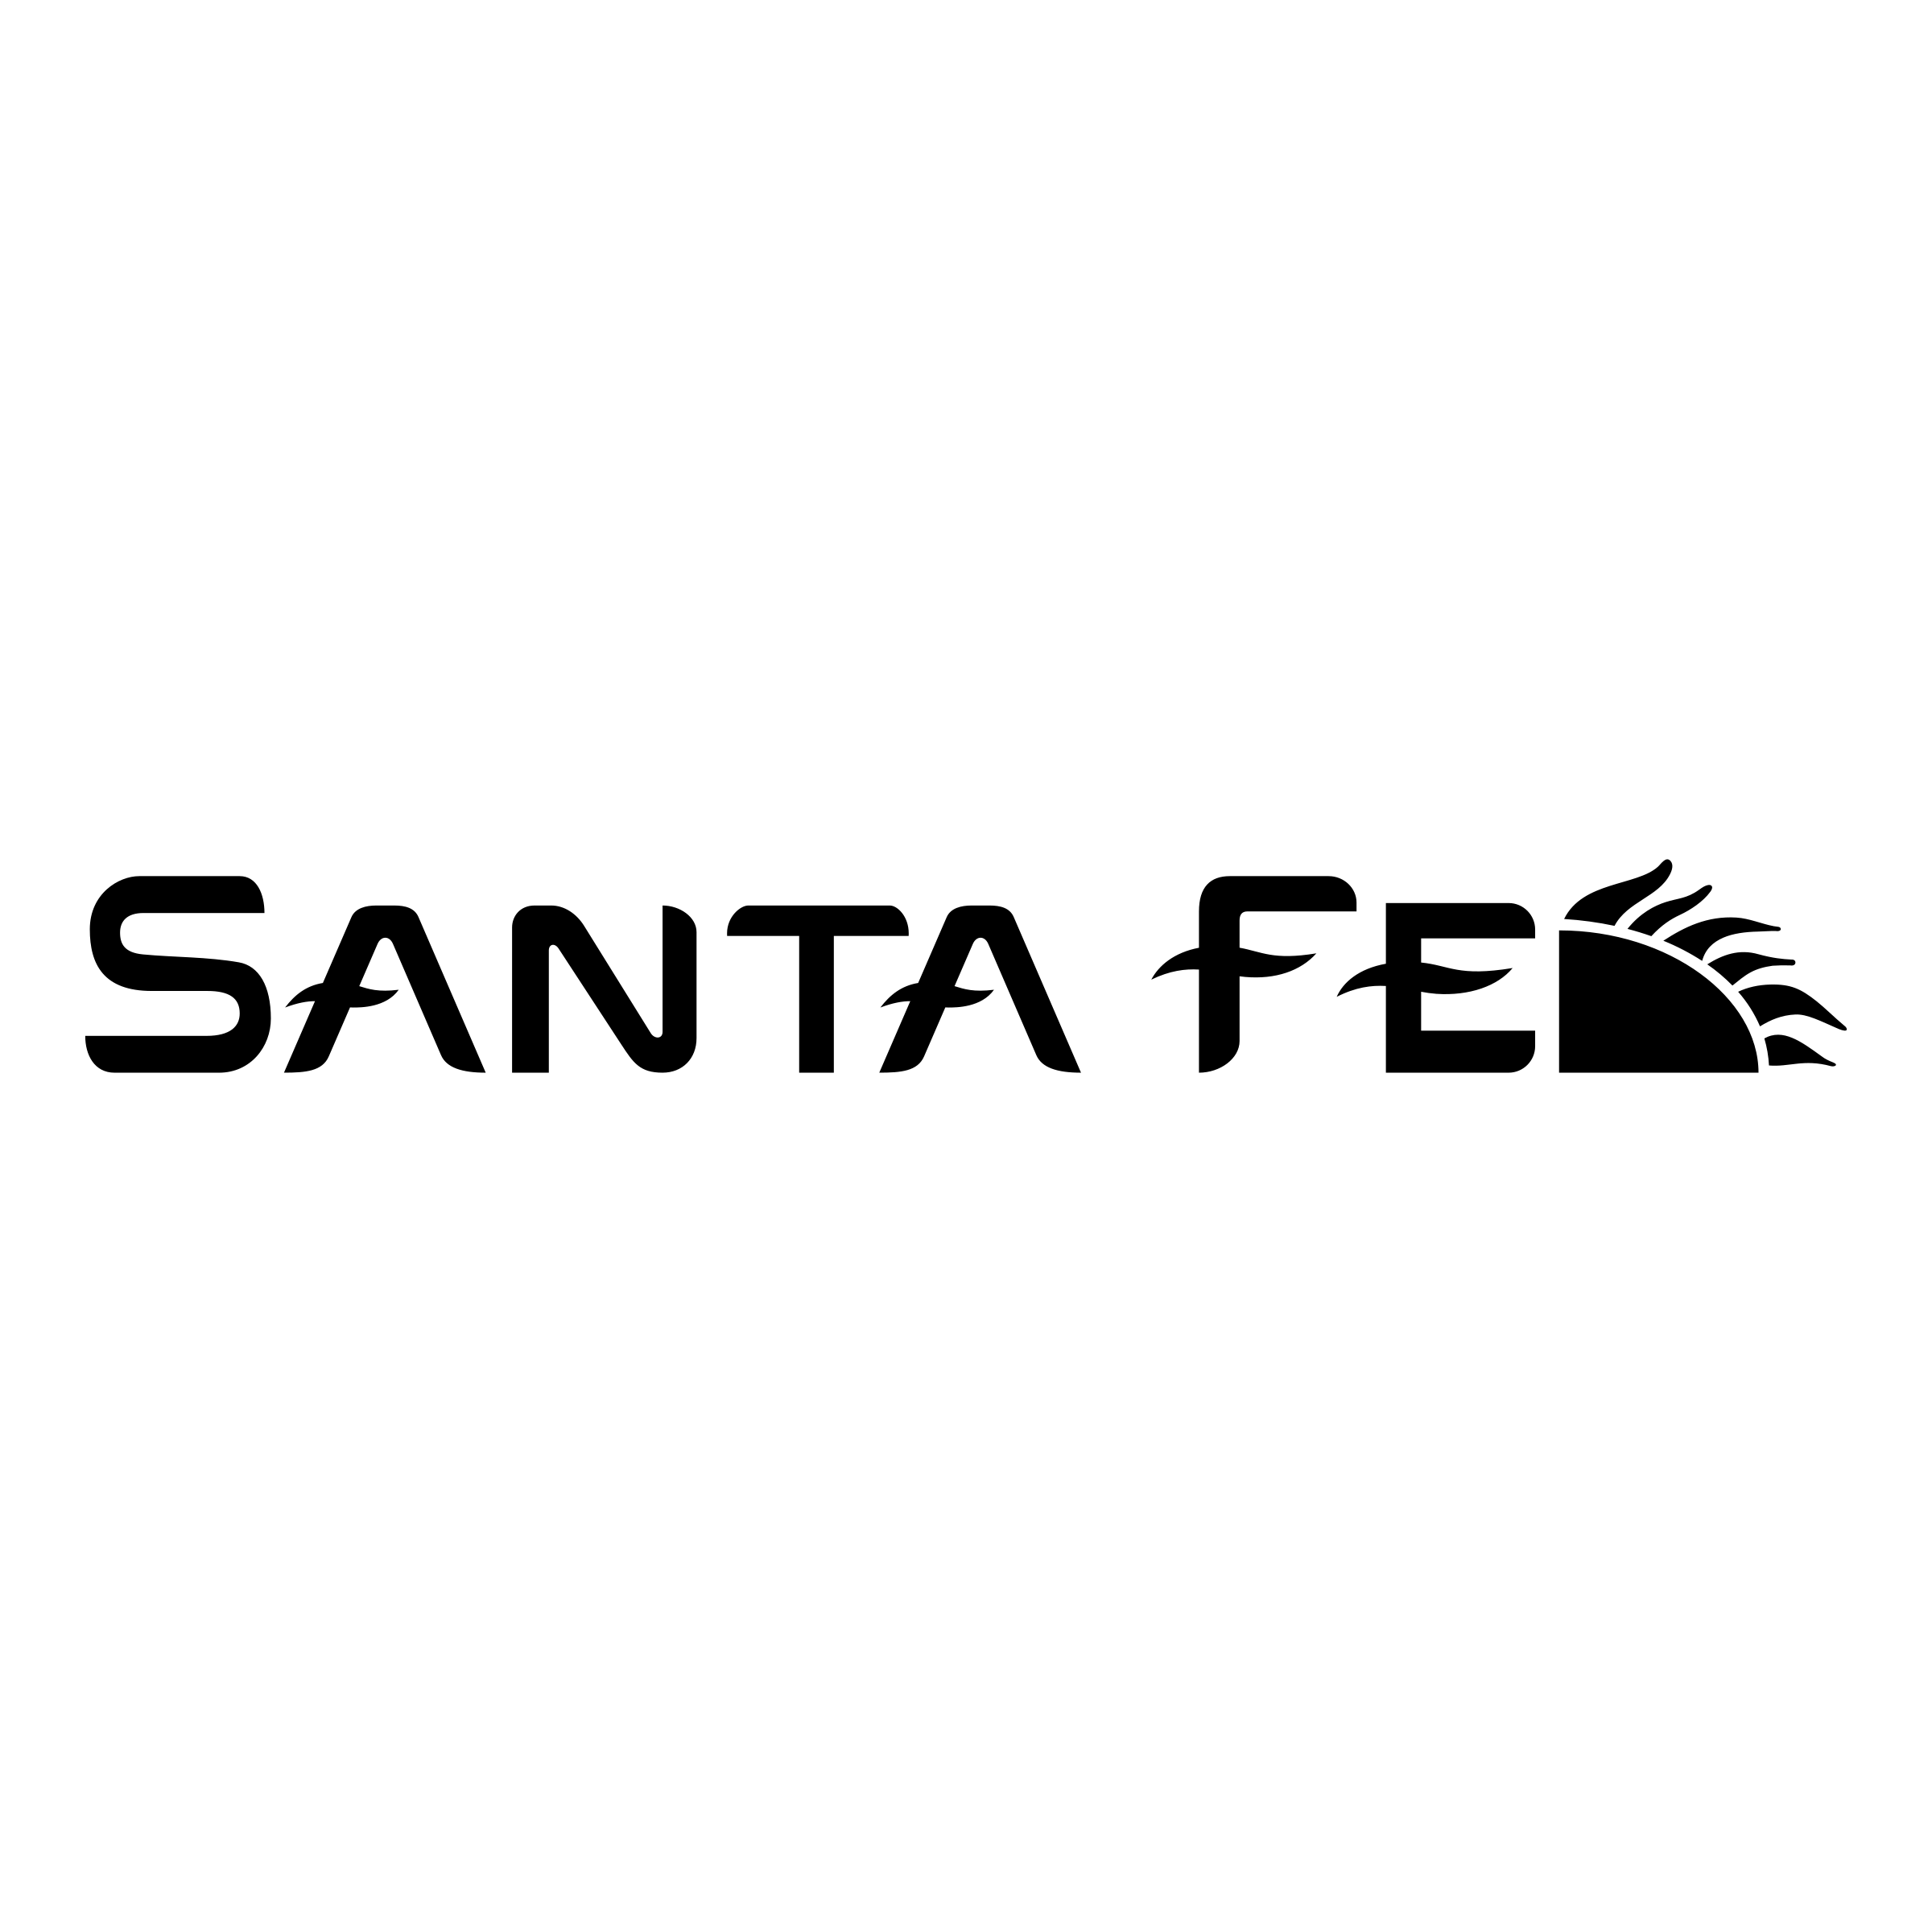 Santa Fe Logo - Santa Fe Logo PNG Transparent & SVG Vector - Freebie Supply